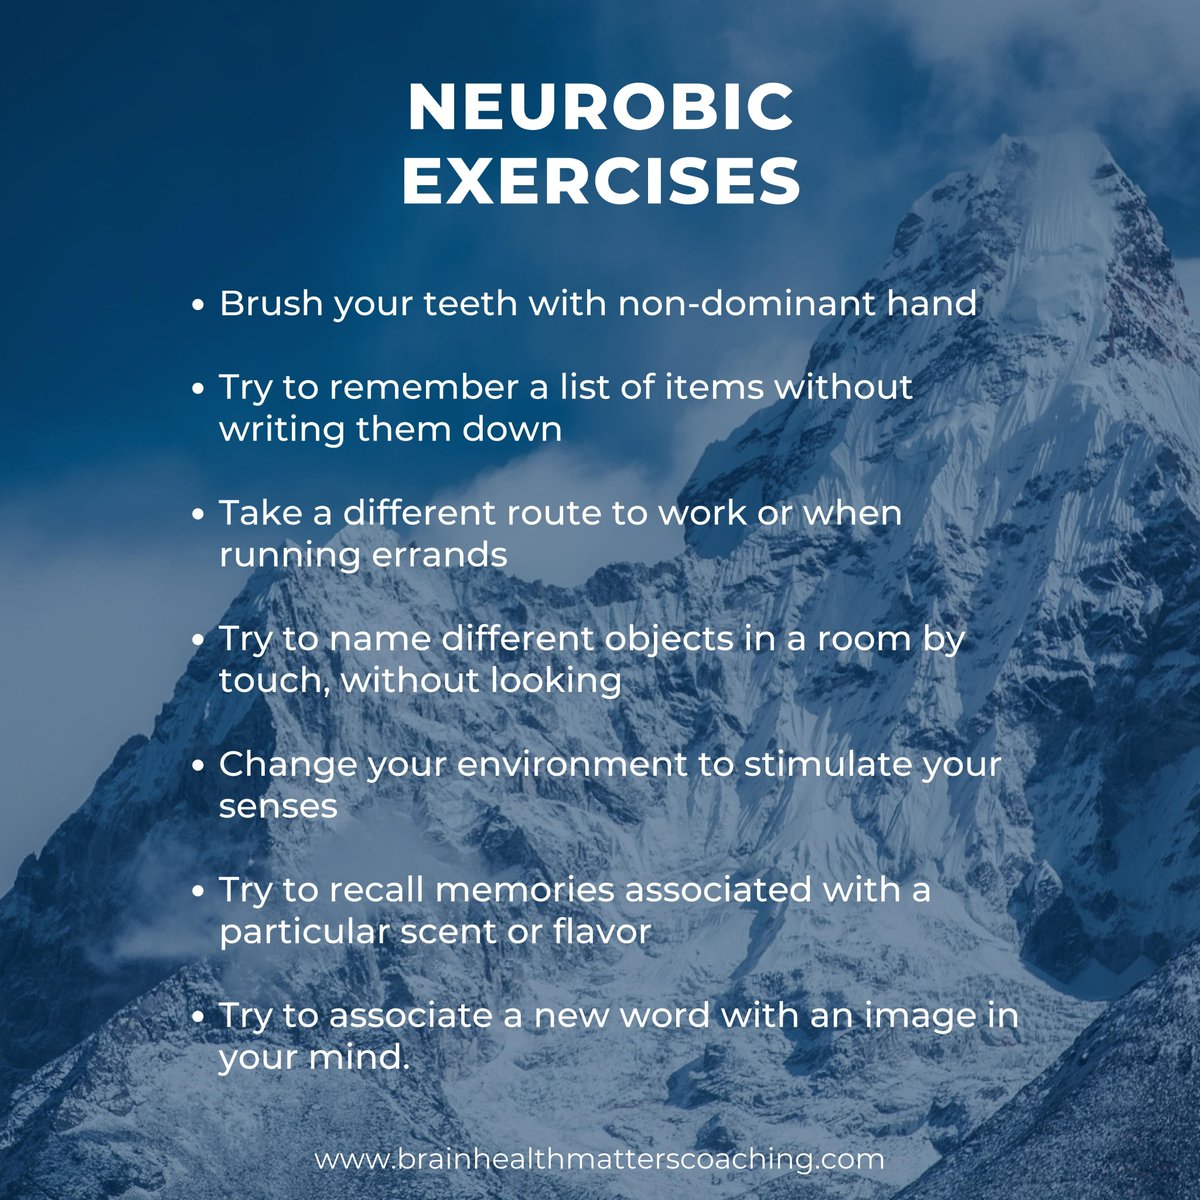 Have you tried Neurobics before? Share your favorite exercises with us!
#neurobics #brainfitness #mentalperformance #challengeyourbrain #staysharp #creativity #mentalhealth #mindbodyconnection #brainhealth #brainhealthmatters